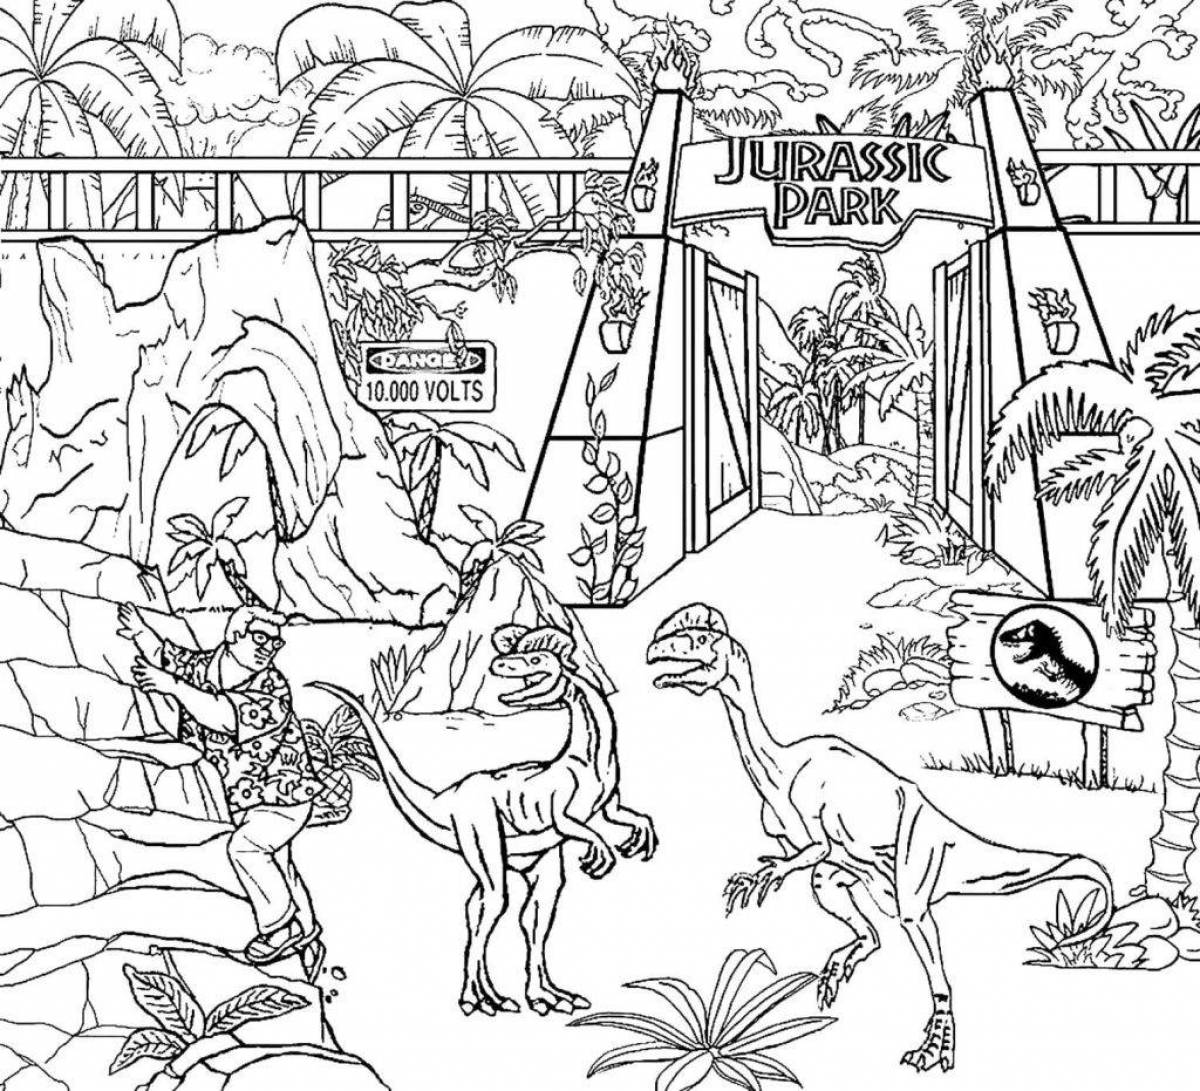 Fun Jurassic World coloring book